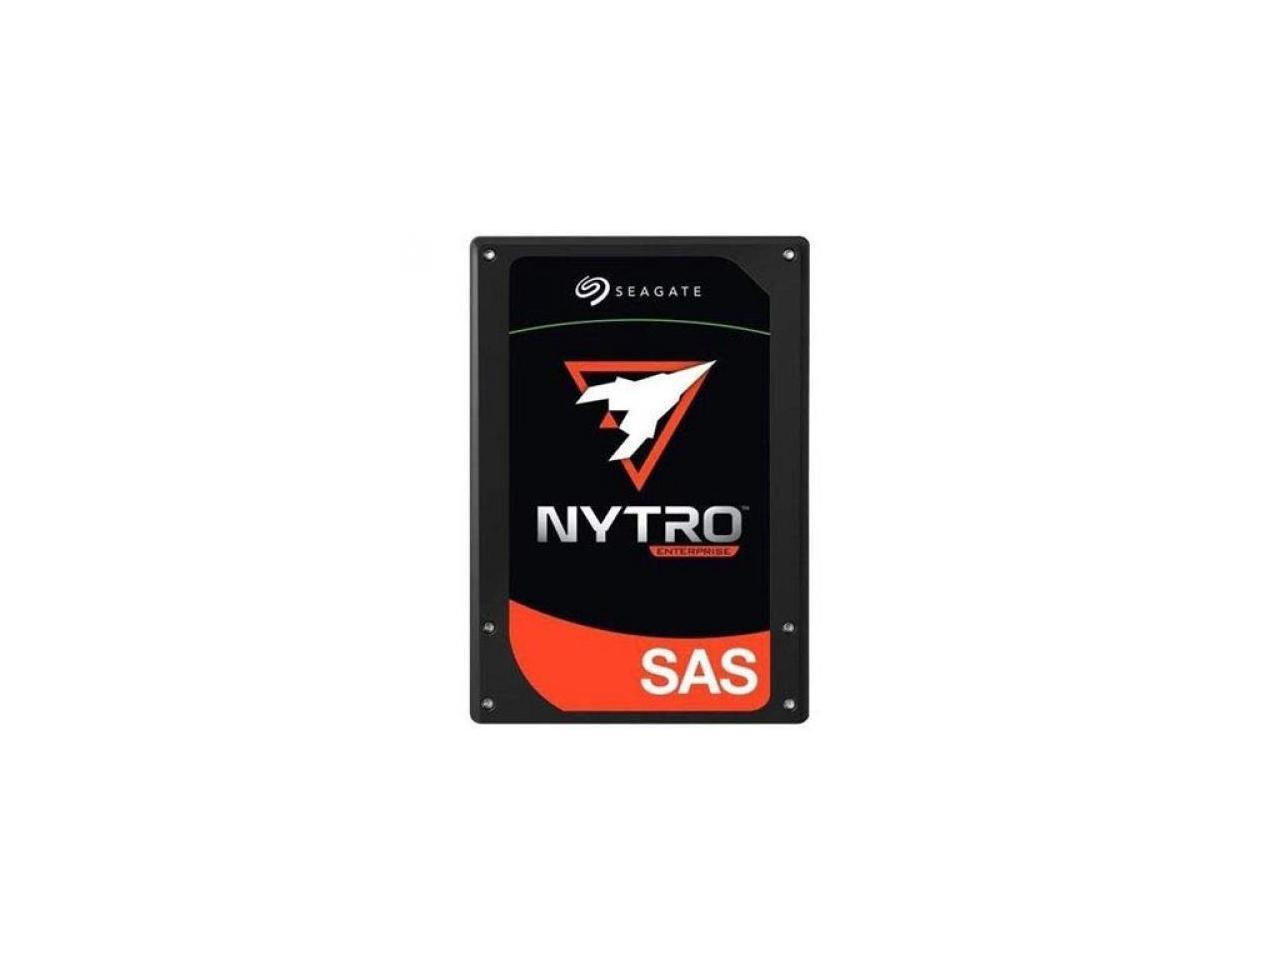 Seagate Nytro 3031 XS400ME70004 400 GB Solid State Drive - SAS (12Gb/s SAS) - 2.5" Drive - Write Intensive - Internal